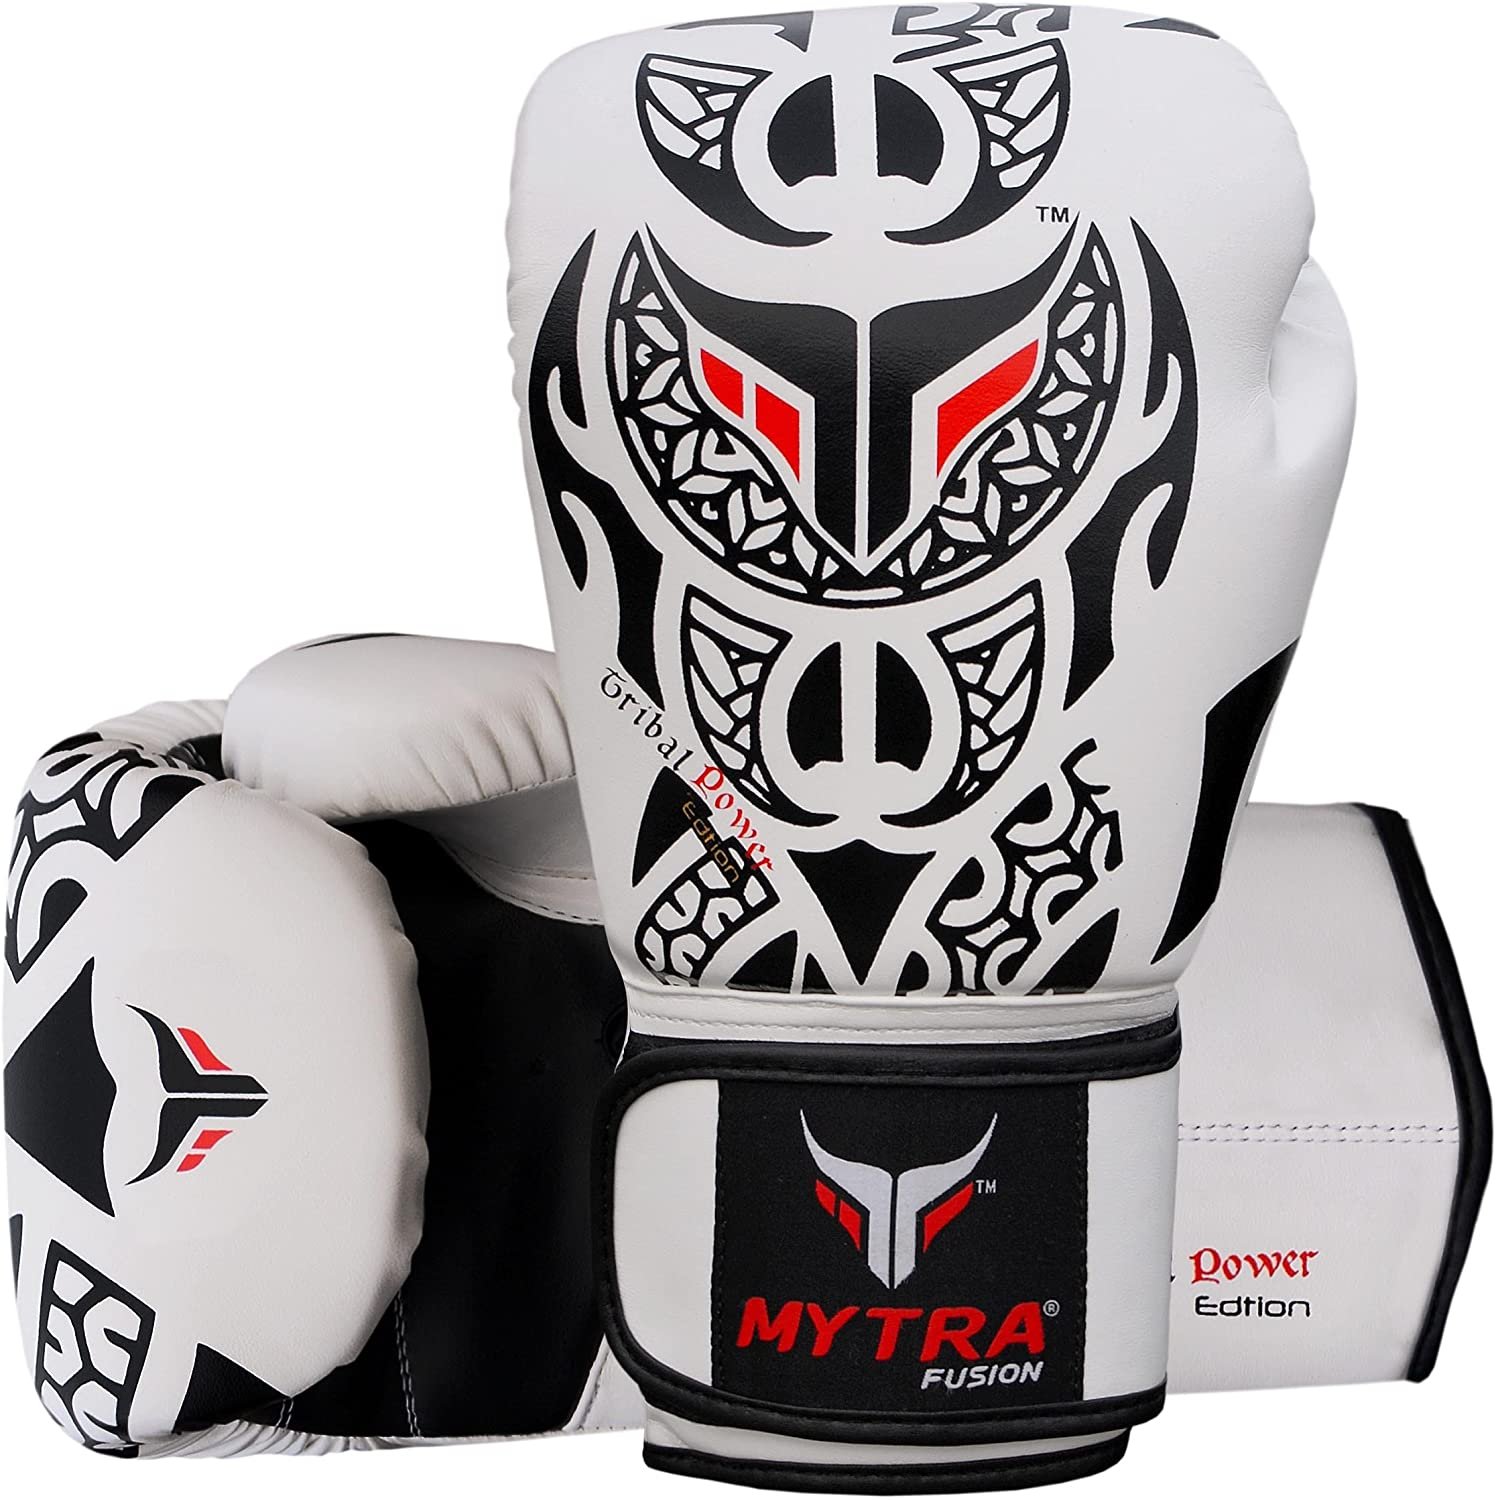 Mytra Fusion Boxing Gloves 10oz 12oz 14oz 16oz Boxing Gloves for Training Punching Sparring Punching Bag Boxing Bag Gloves Punch Bag Mitts 